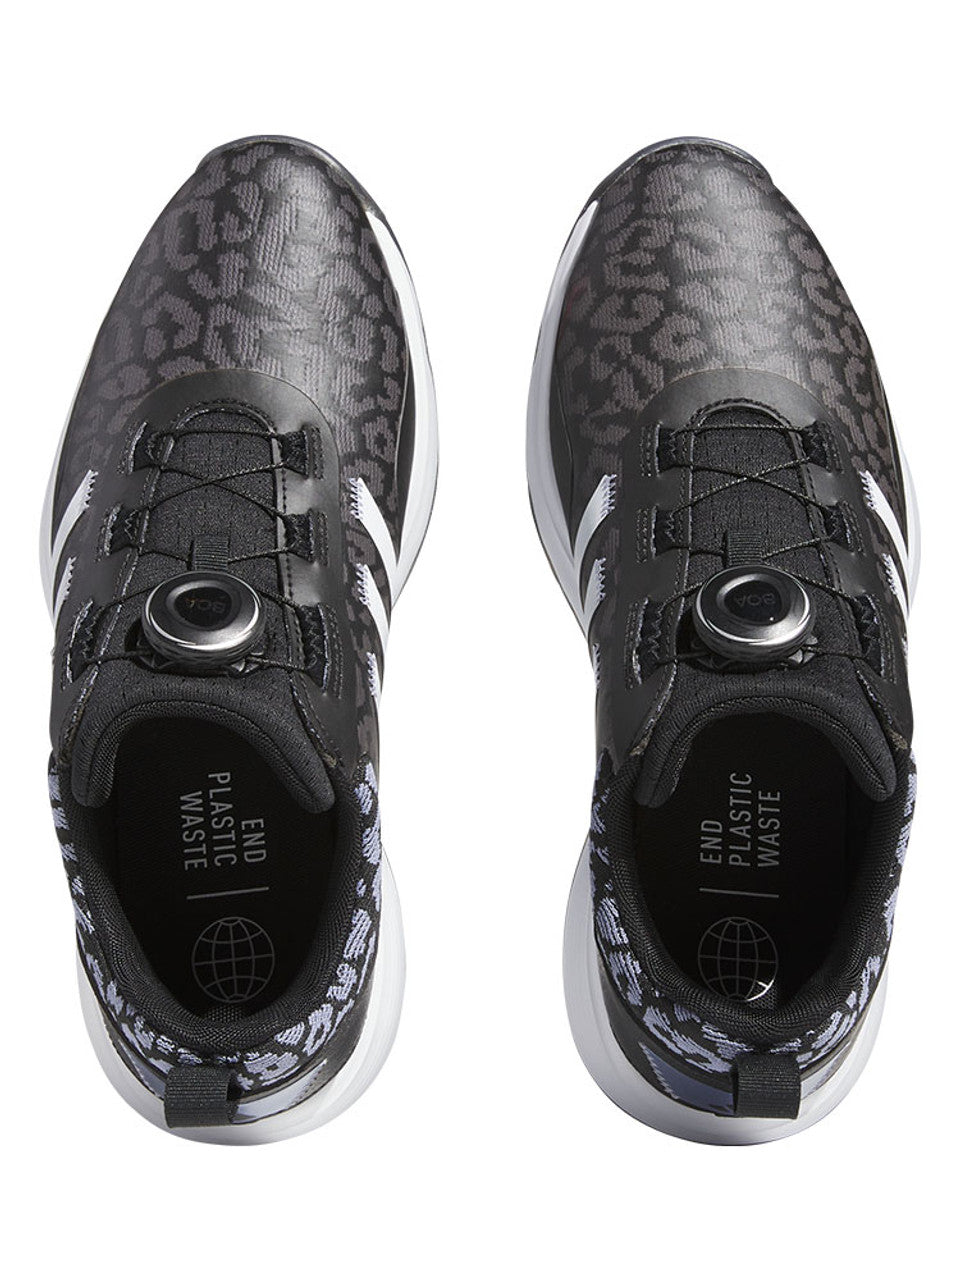 Adidas Women's S2G BOA Golf Shoes